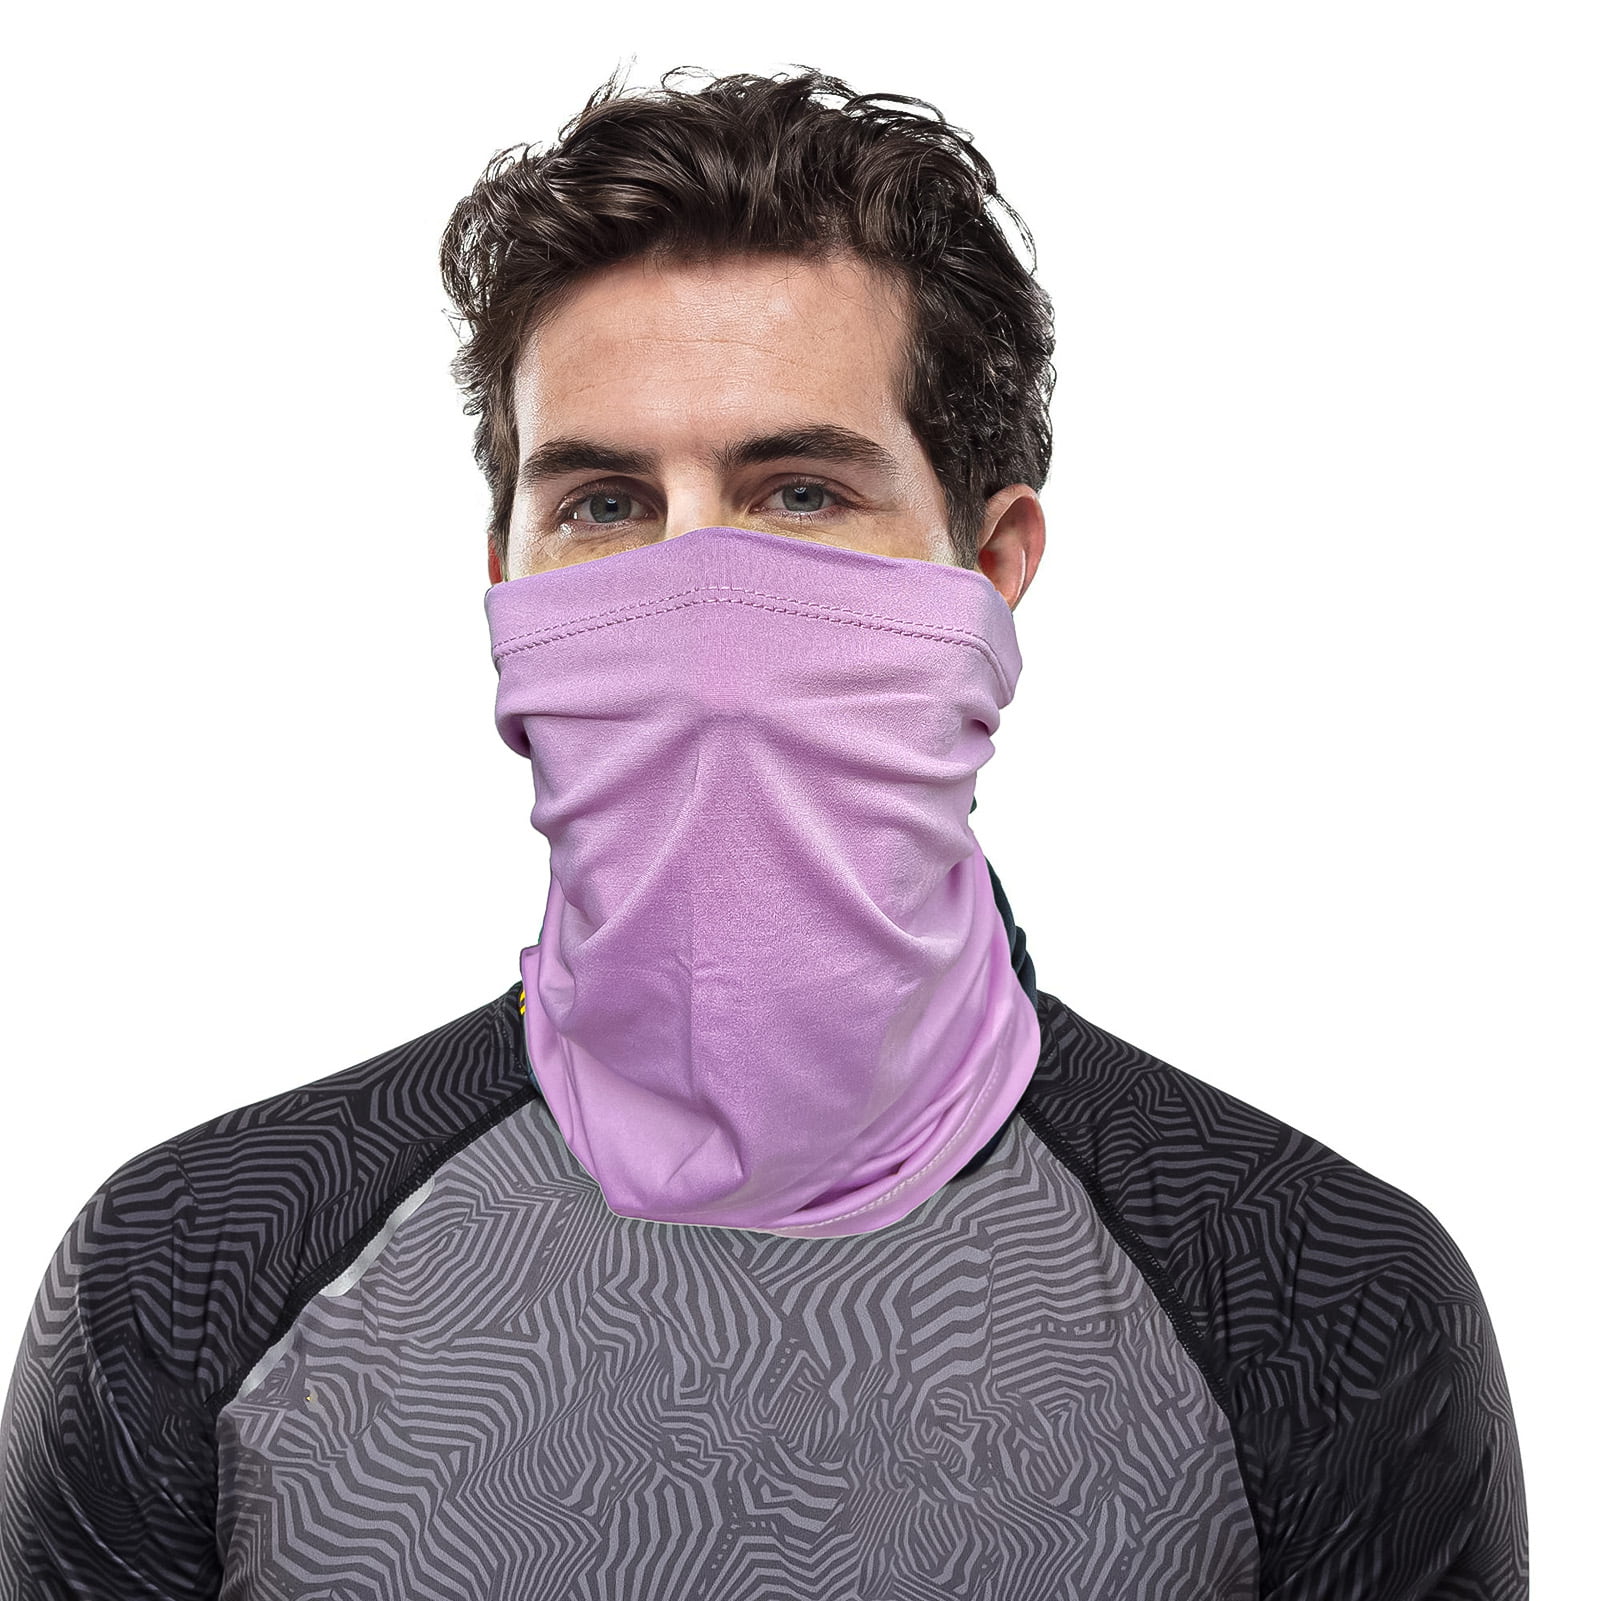 Unisex Ice Silk Face Cover Neck Gaiter Breathable Bandana Cycling Fishing Scarf 